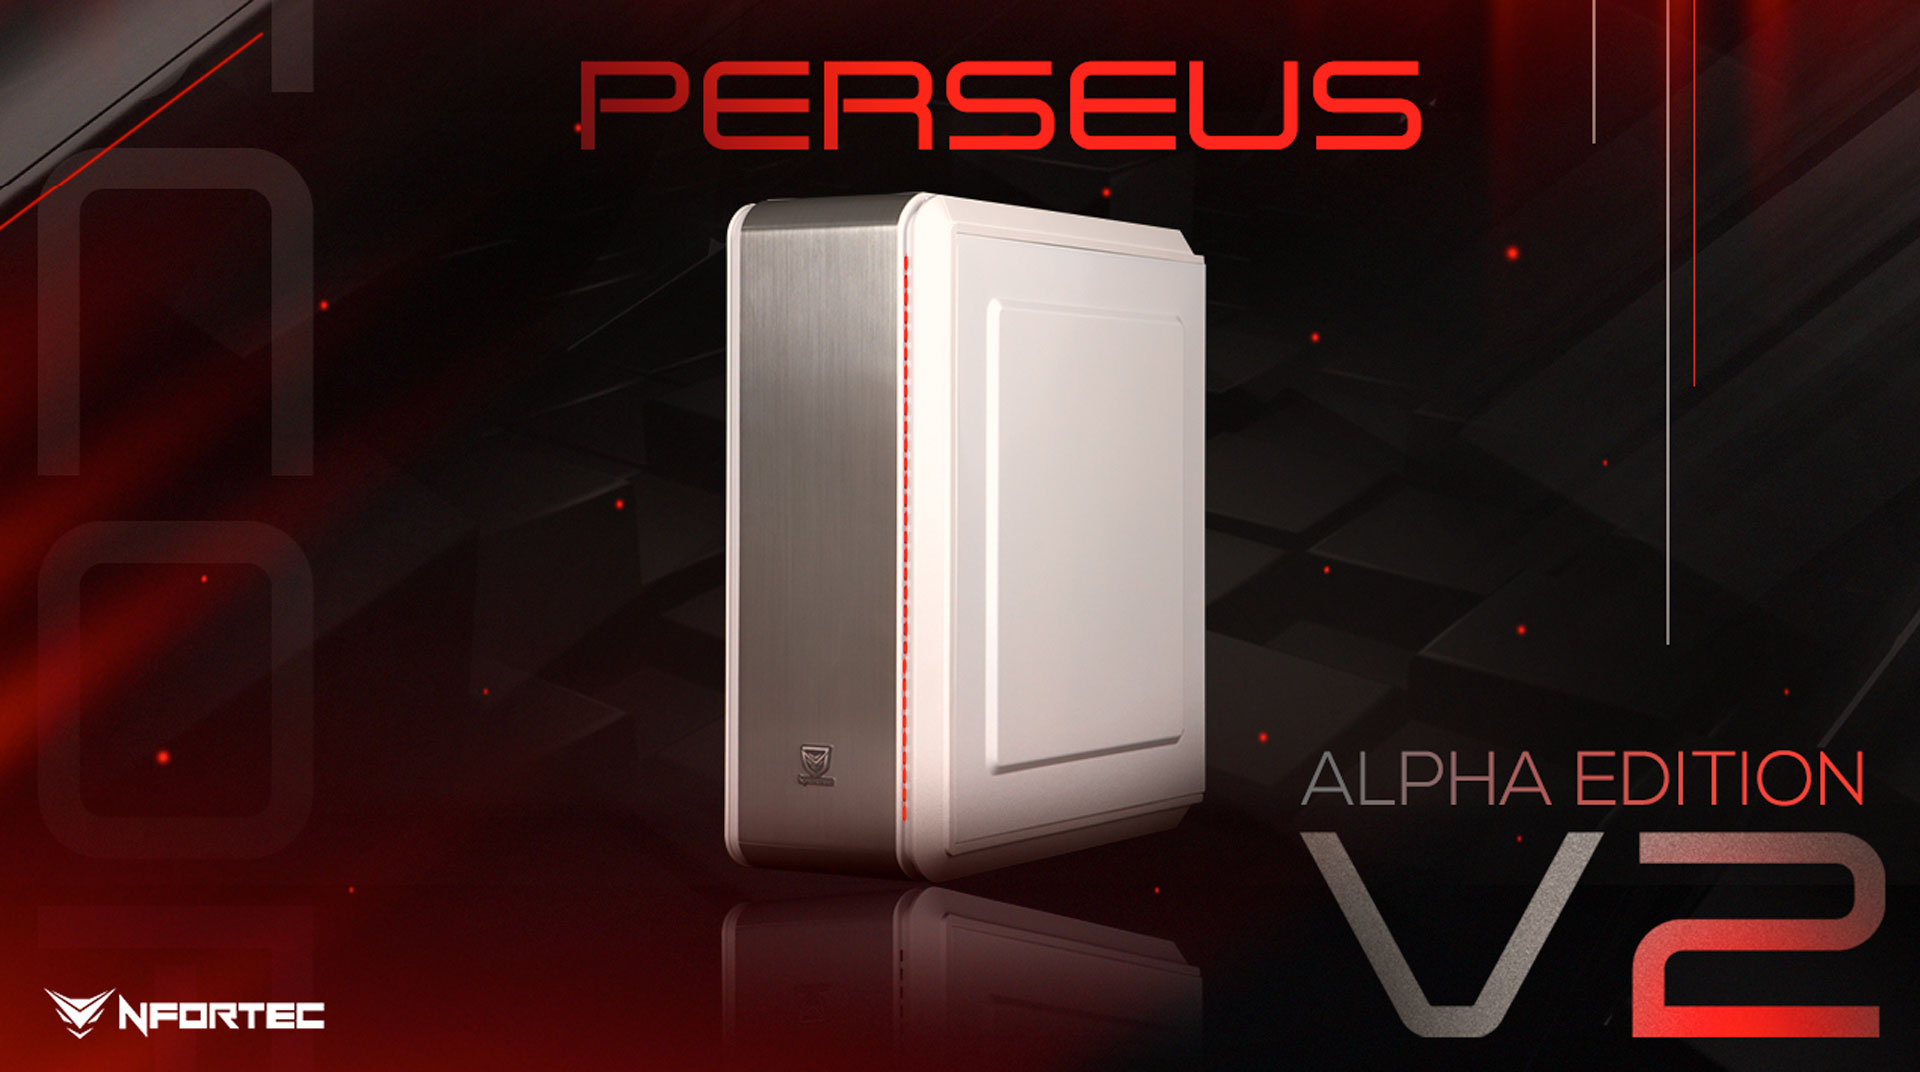 Perseus V2 Alpha Edition